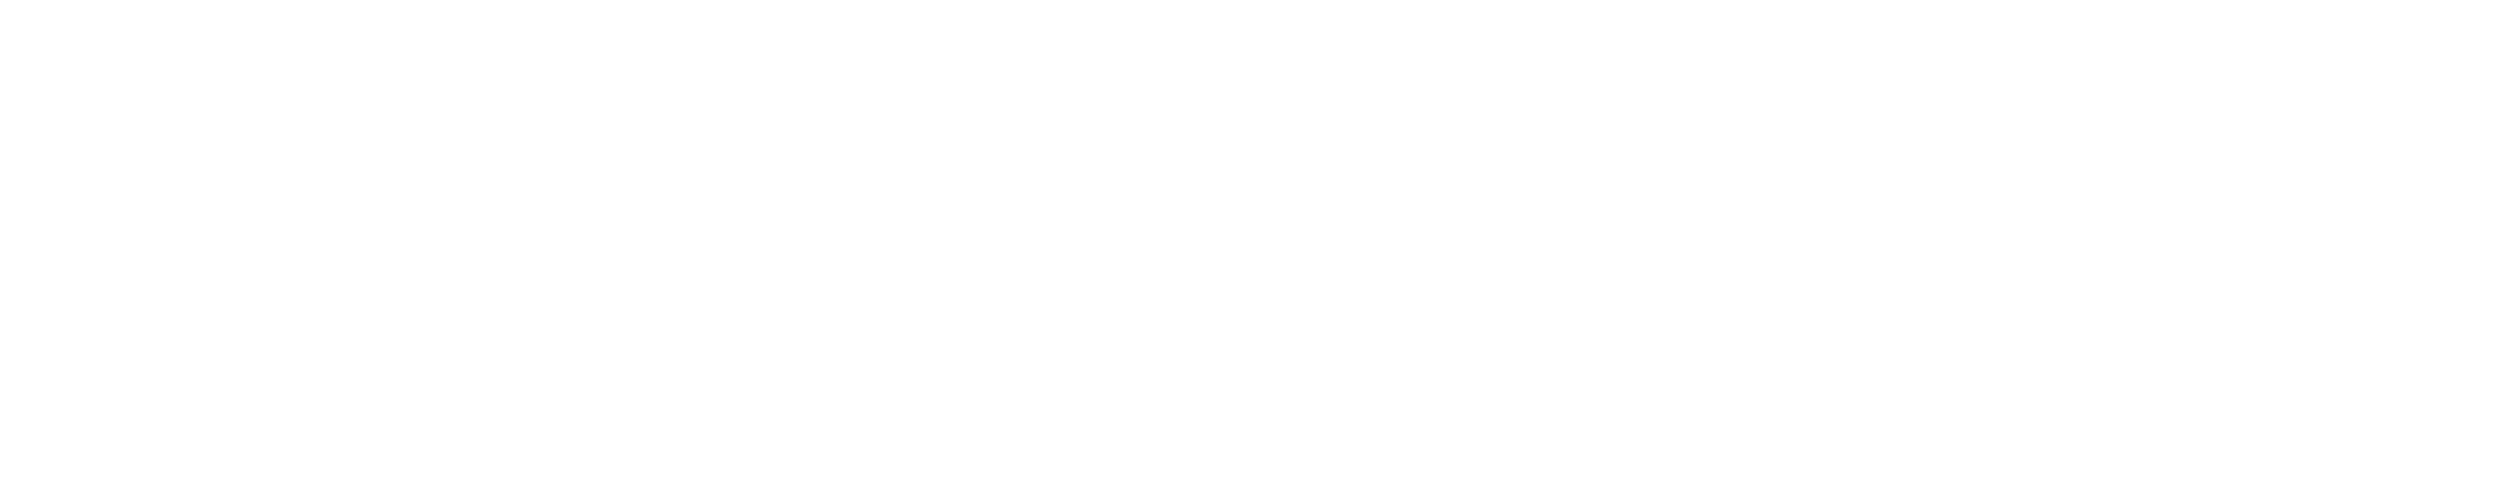 Victor Victoria Coffee